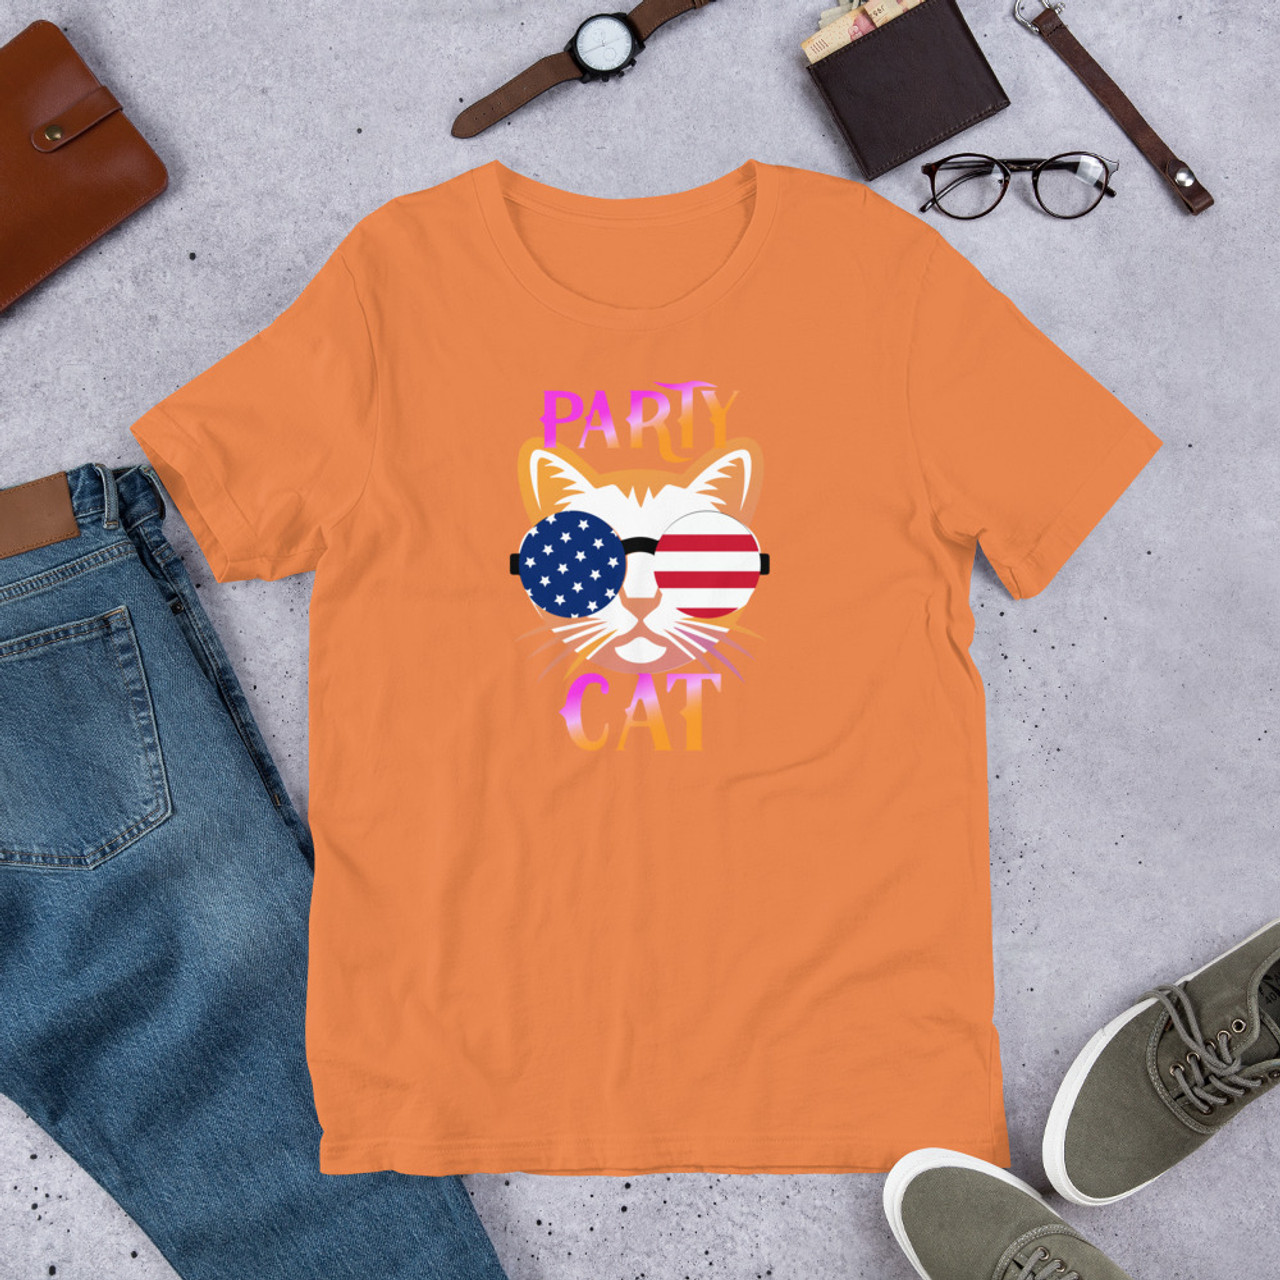 Burnt Orange T-Shirt - Bella + Canvas 3001 Party Cat